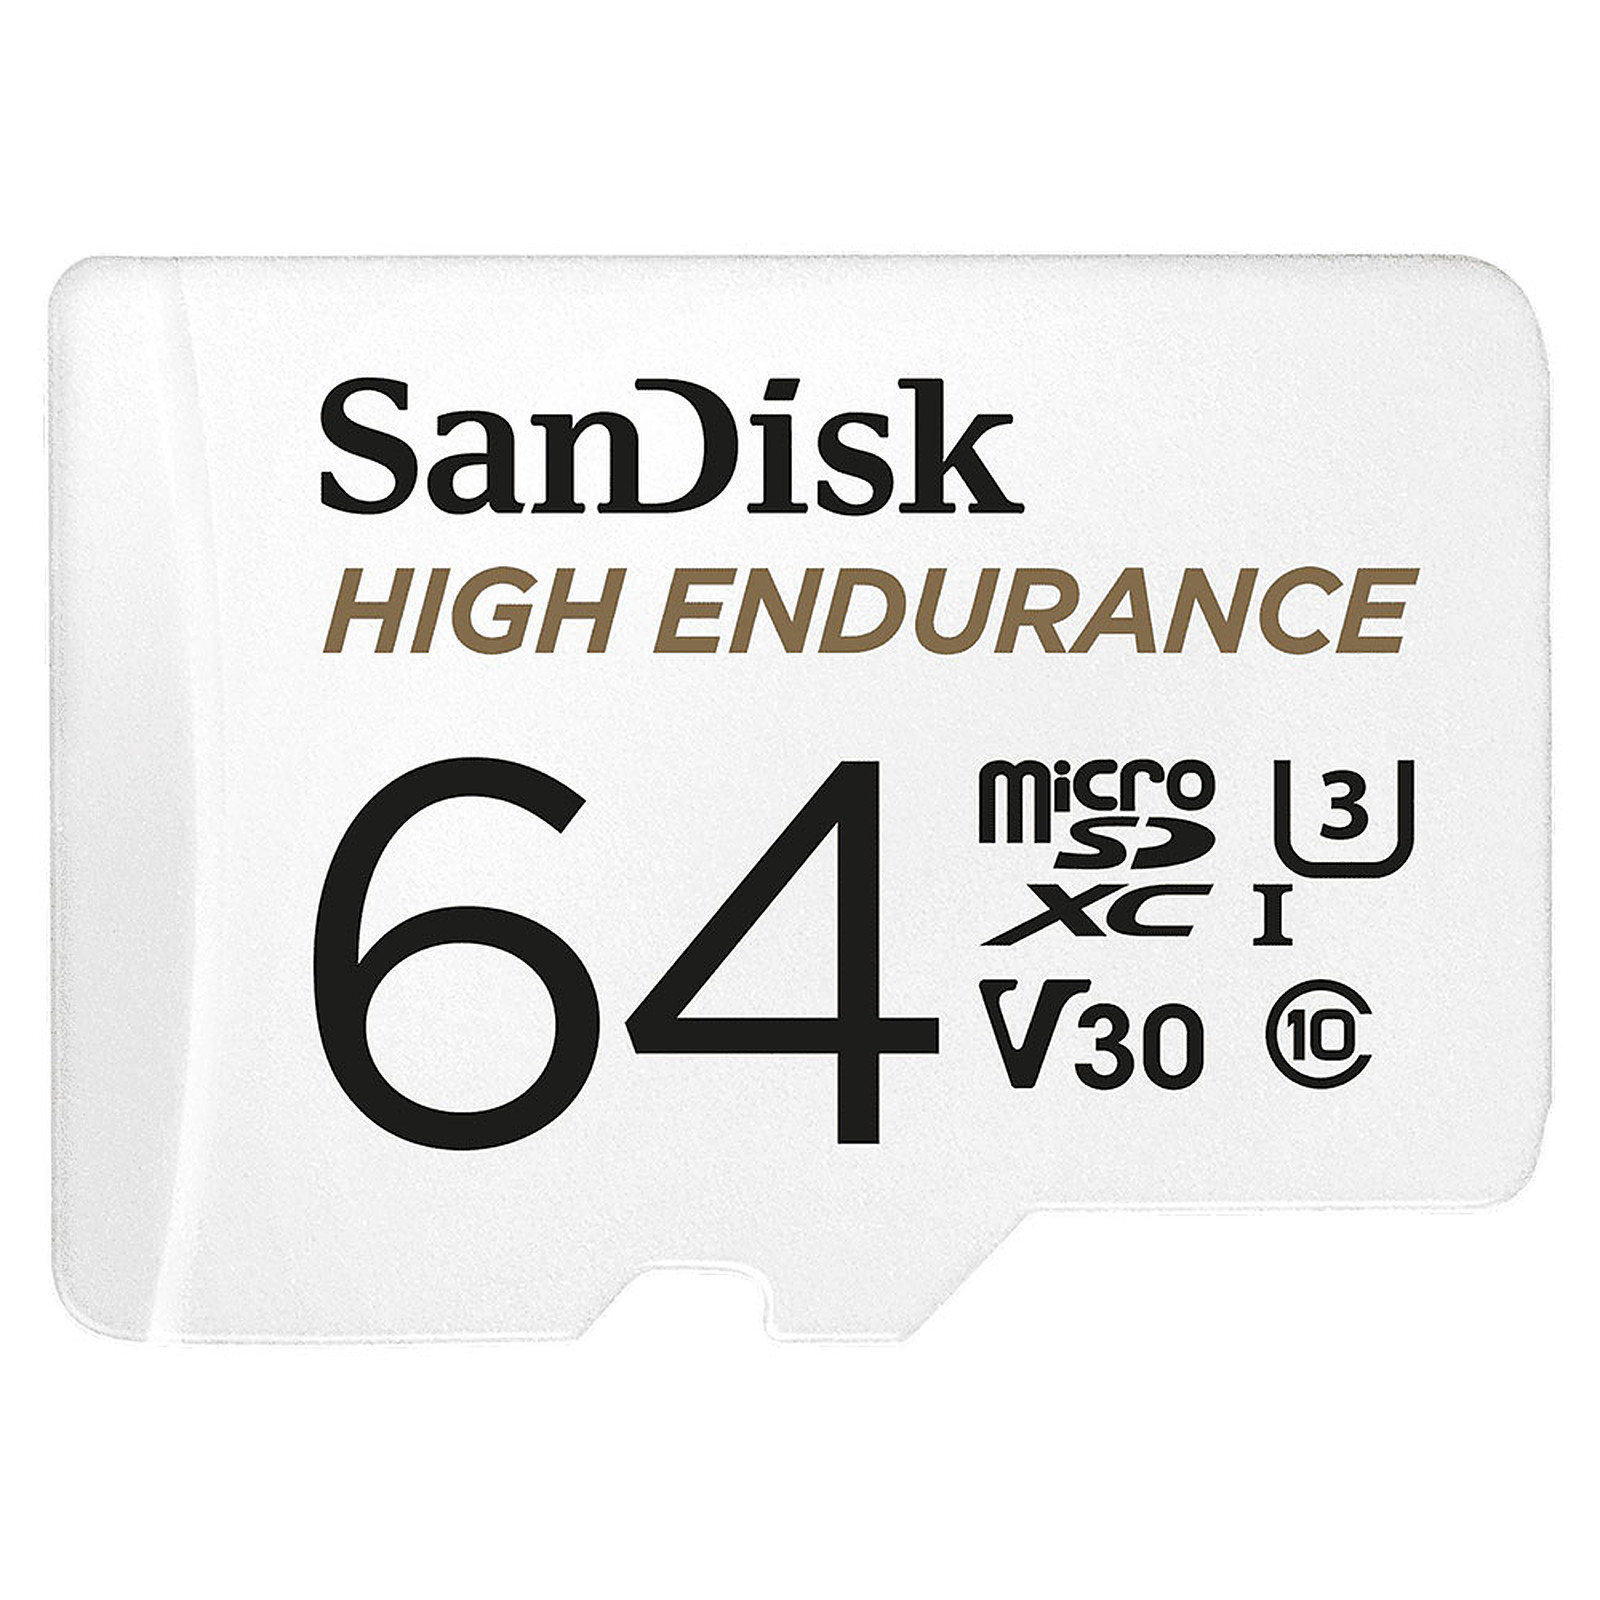 SanDisk High Endurance microSDXC UHS-I U3 V30 64 Go + Adaptateur SD - Carte memoire Sandisk